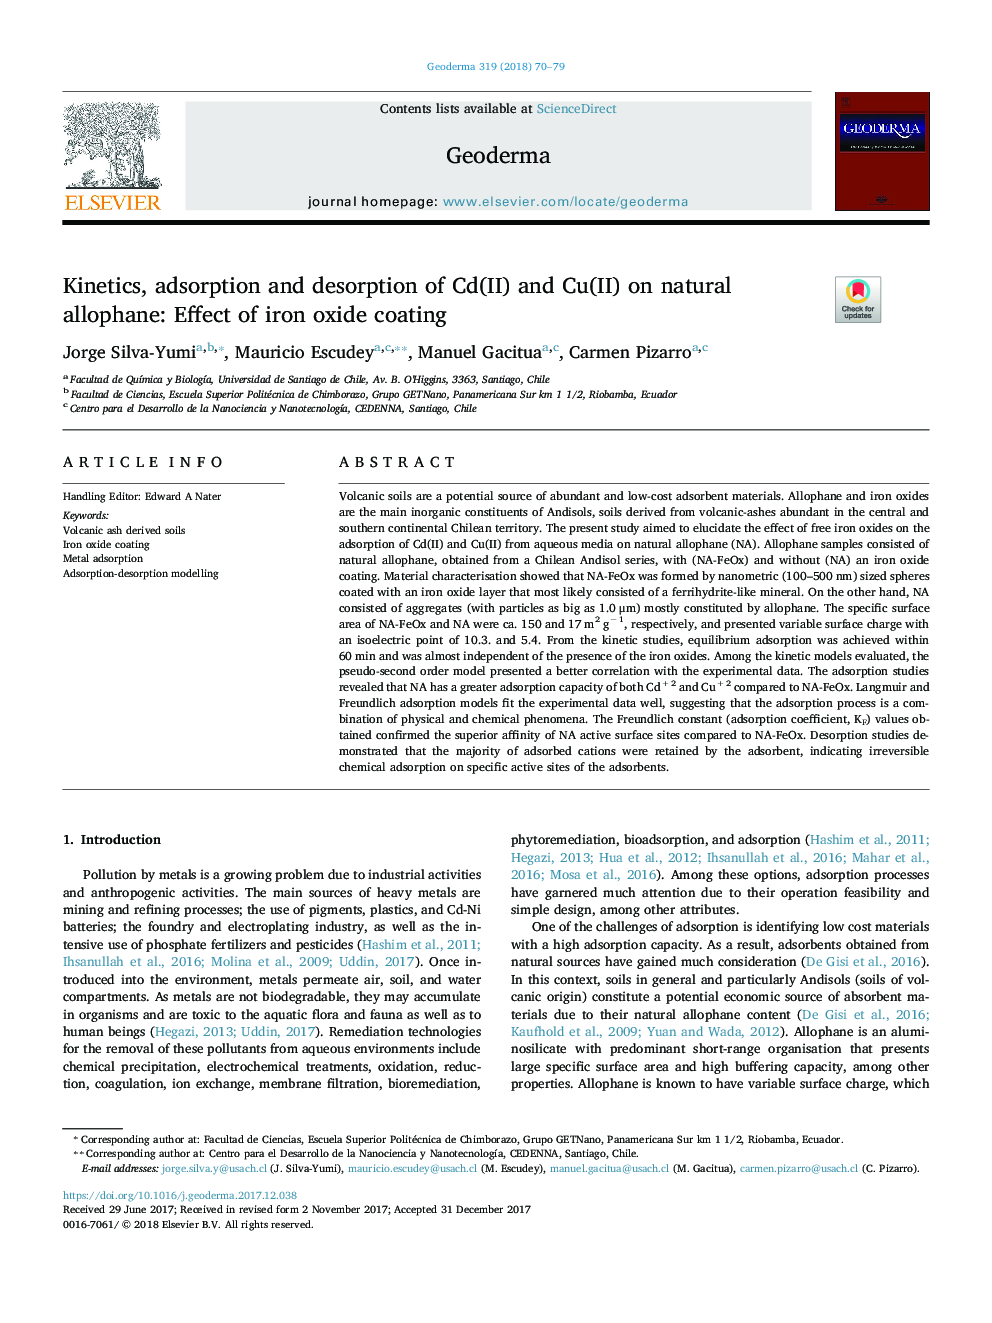 Kinetics, adsorption and desorption of Cd(II) and Cu(II) on natural allophane: Effect of iron oxide coating